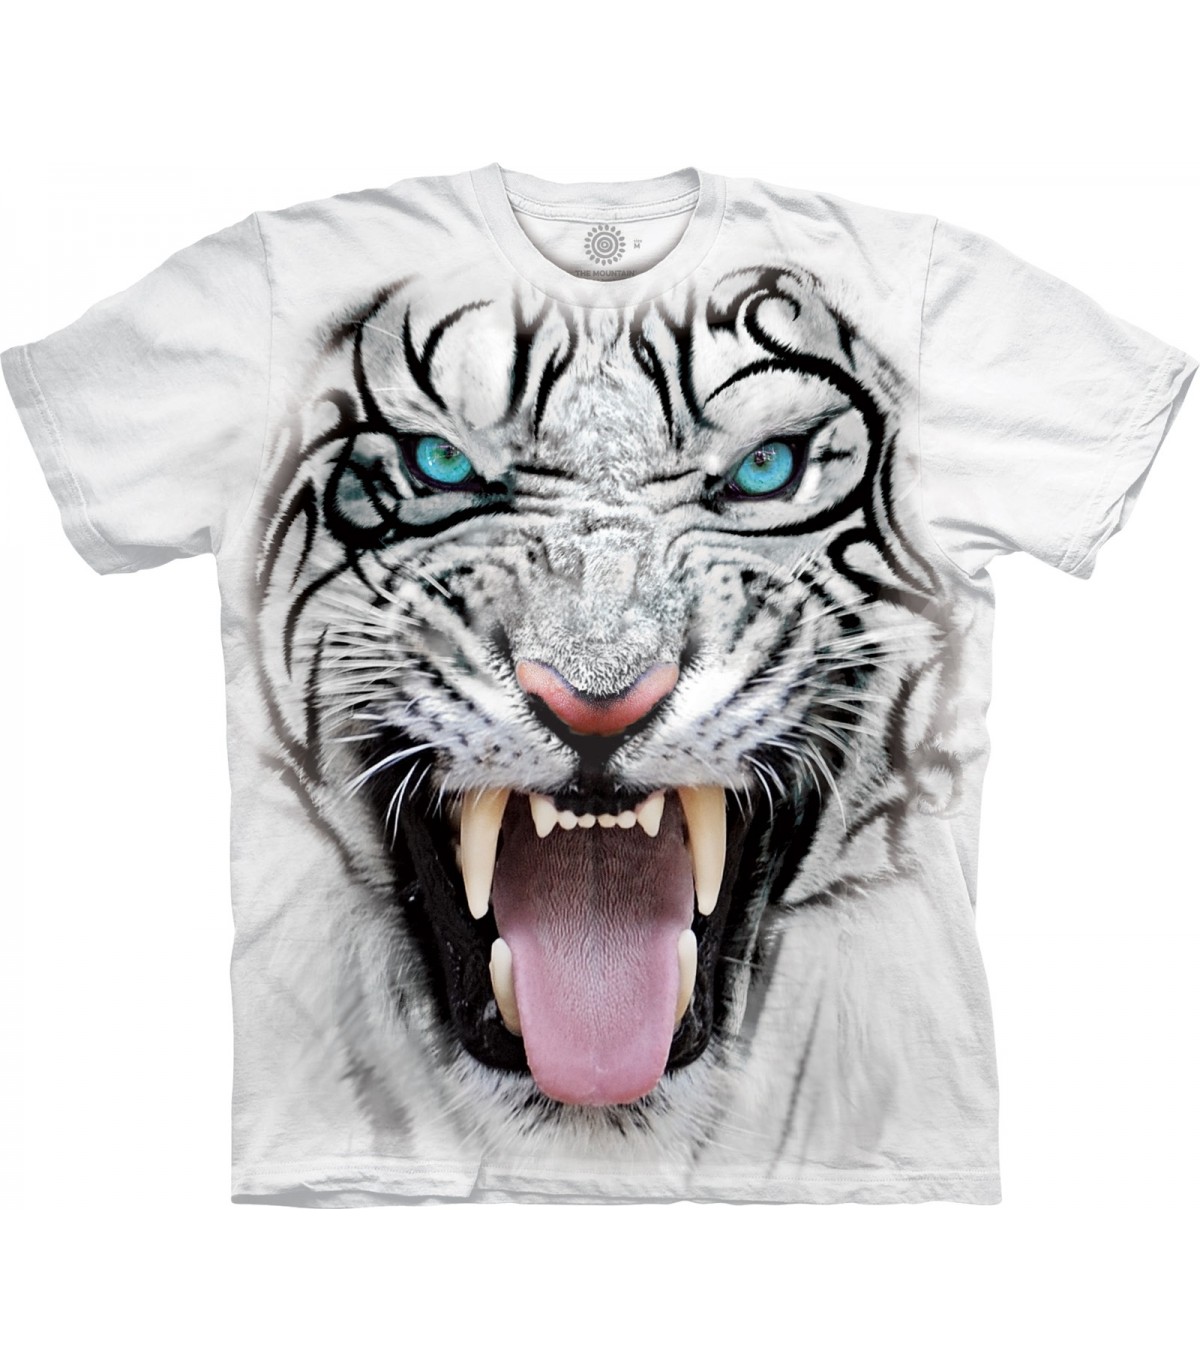 the mountain tiger shirt